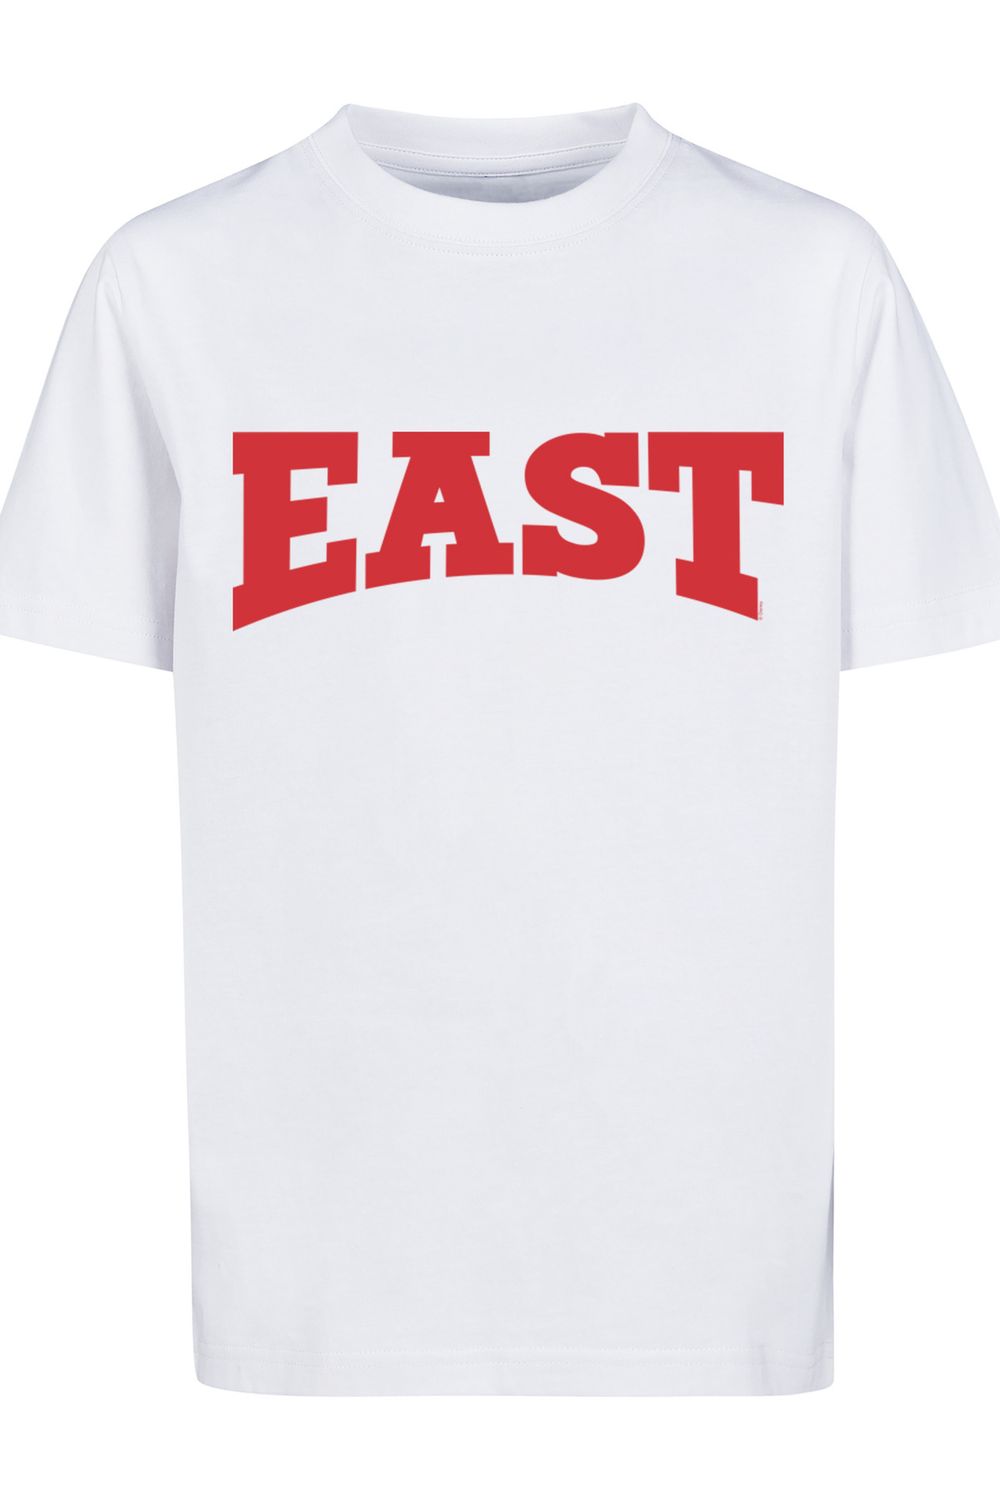 Das High - High Disney T-Shirt School Basic- Trendyol mit Kinder Musical F4NT4STIC für Kinder Musical East